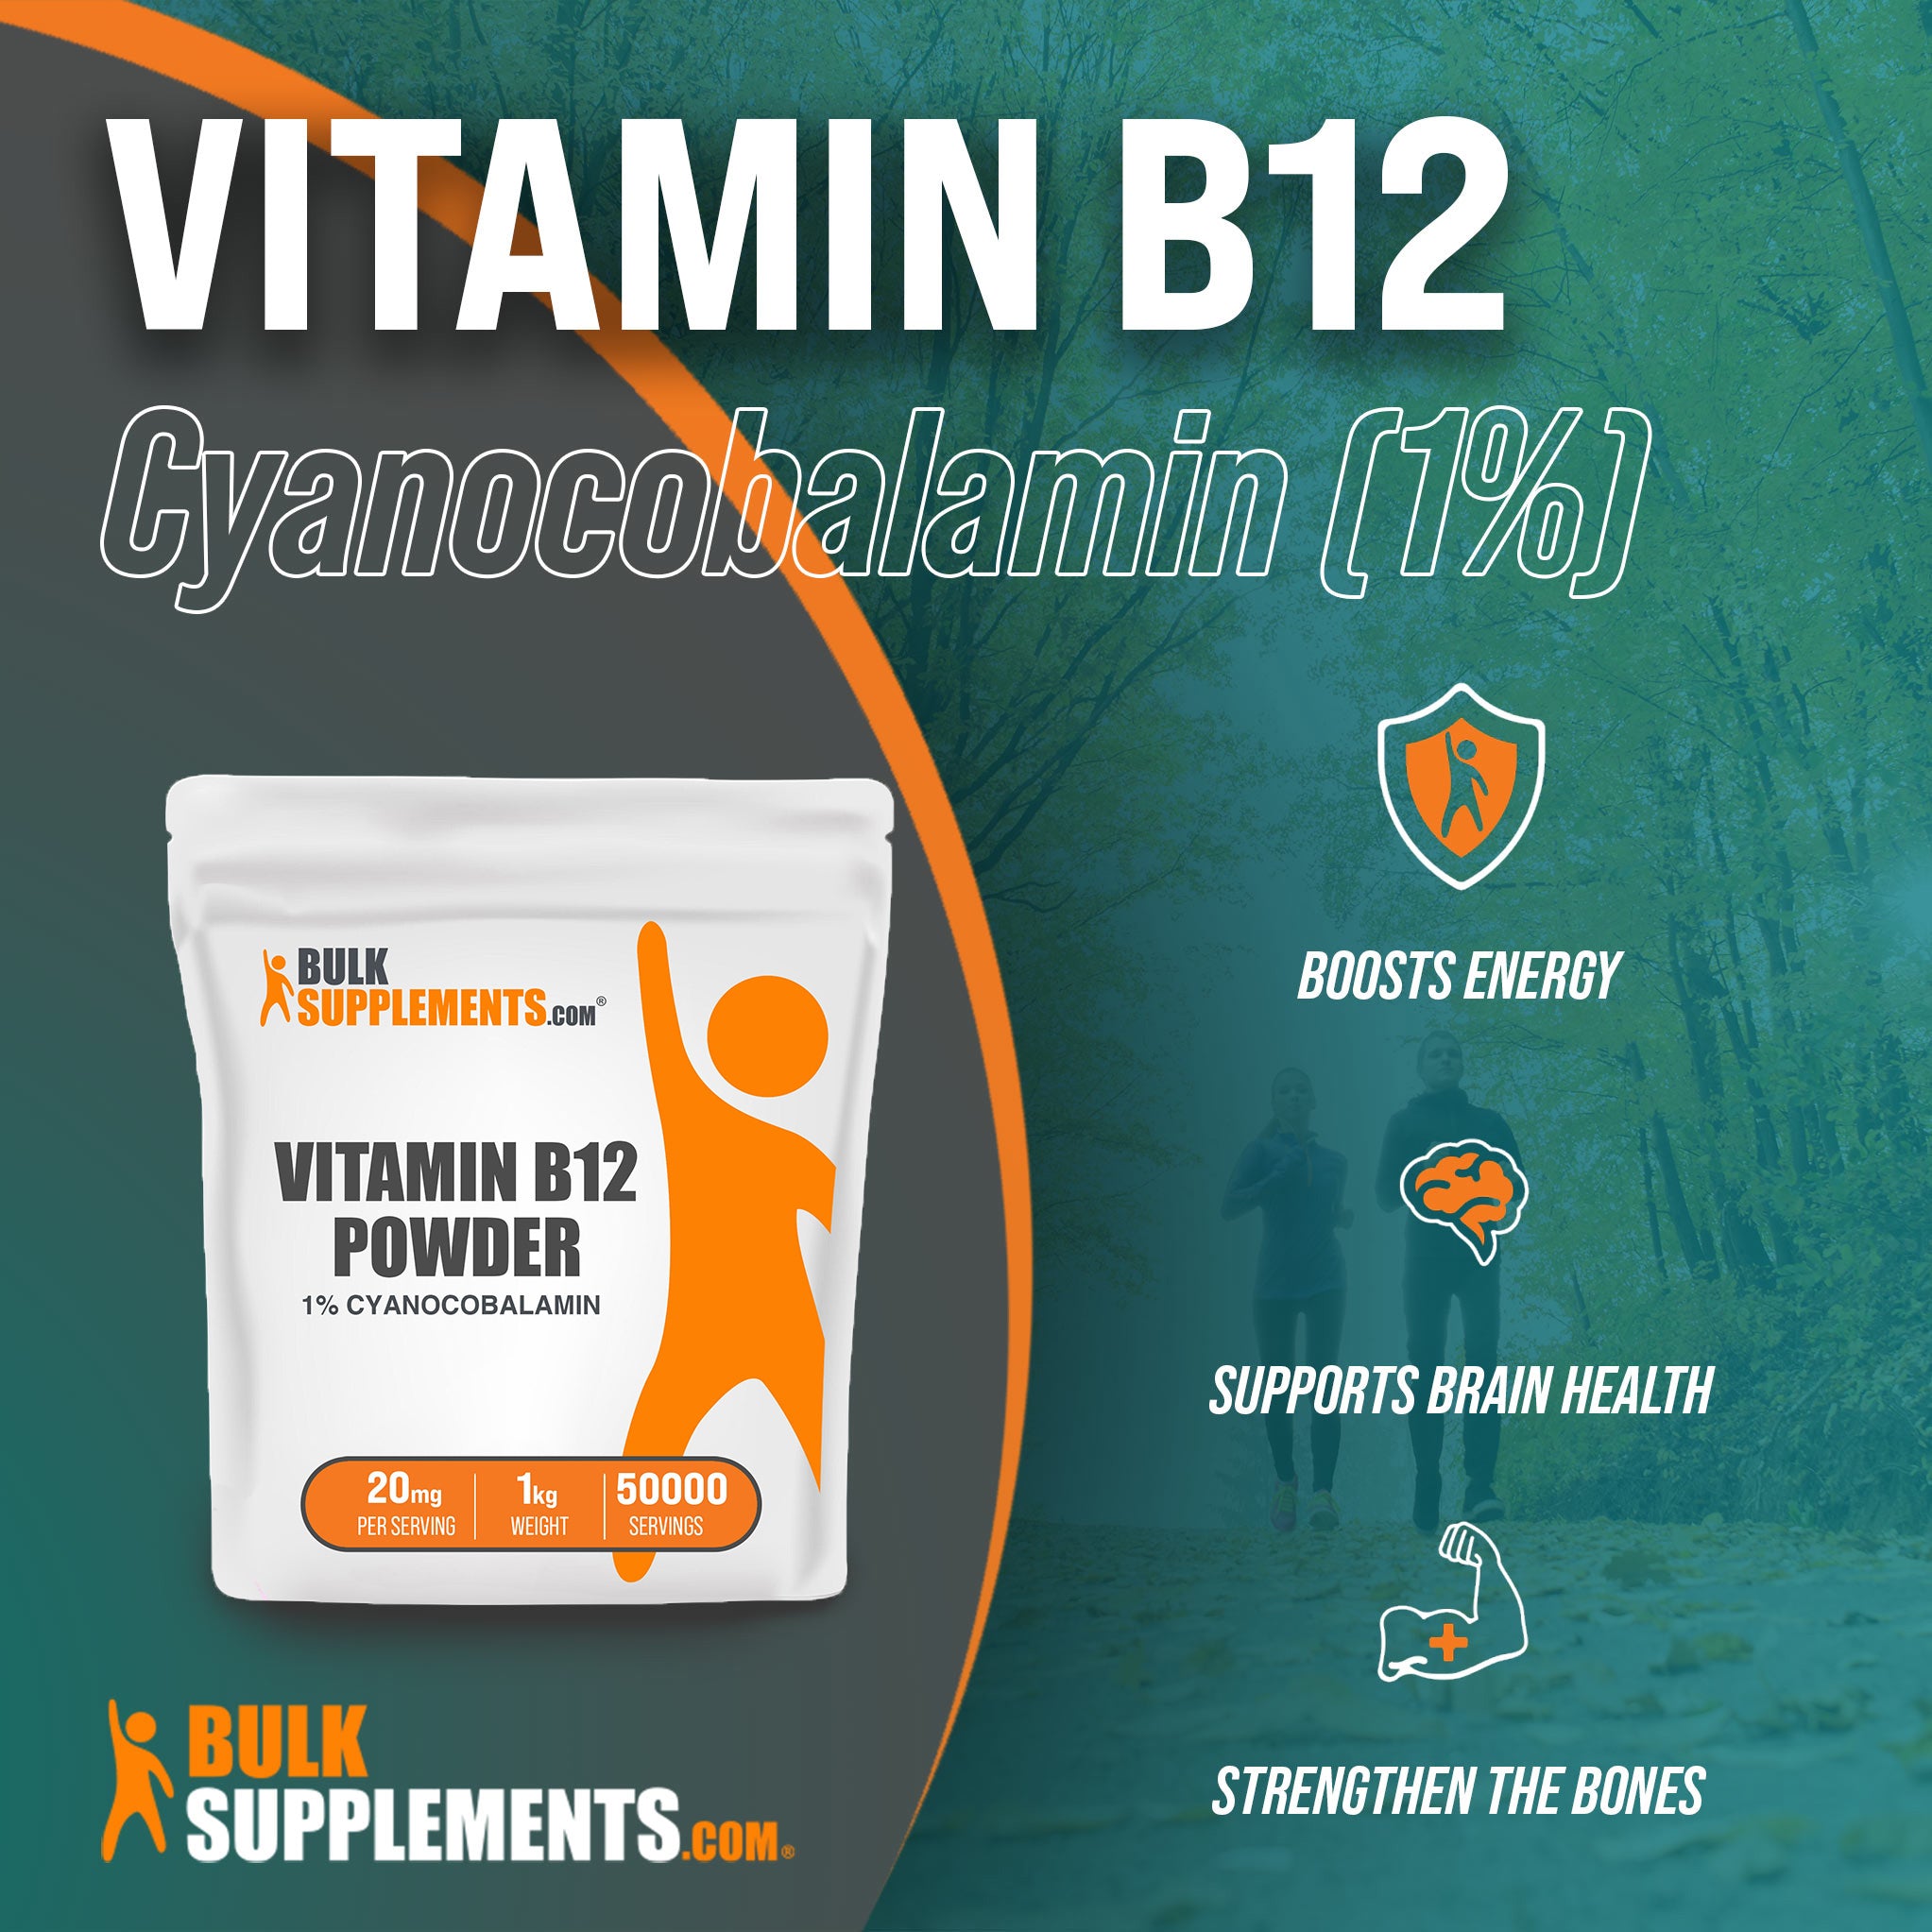 Benefits of Vitamin B12 1% Cyanocobalamin: boosts energy, supports brain health, strengthen the bones